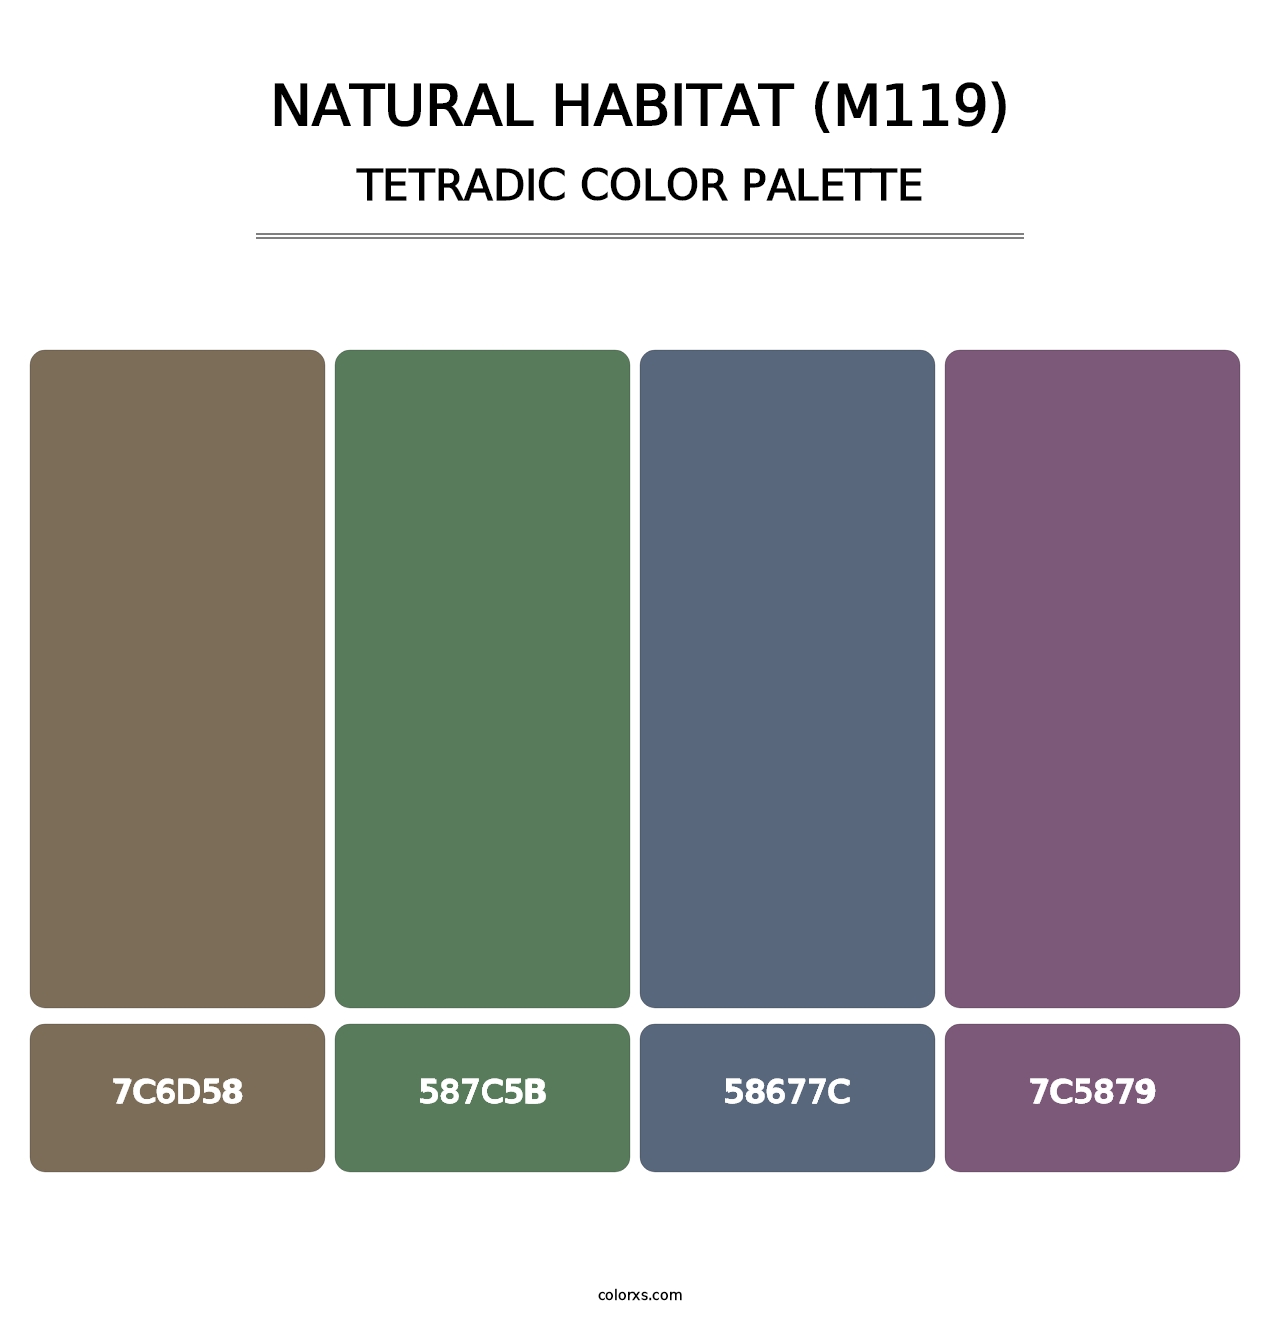 Natural Habitat (M119) - Tetradic Color Palette